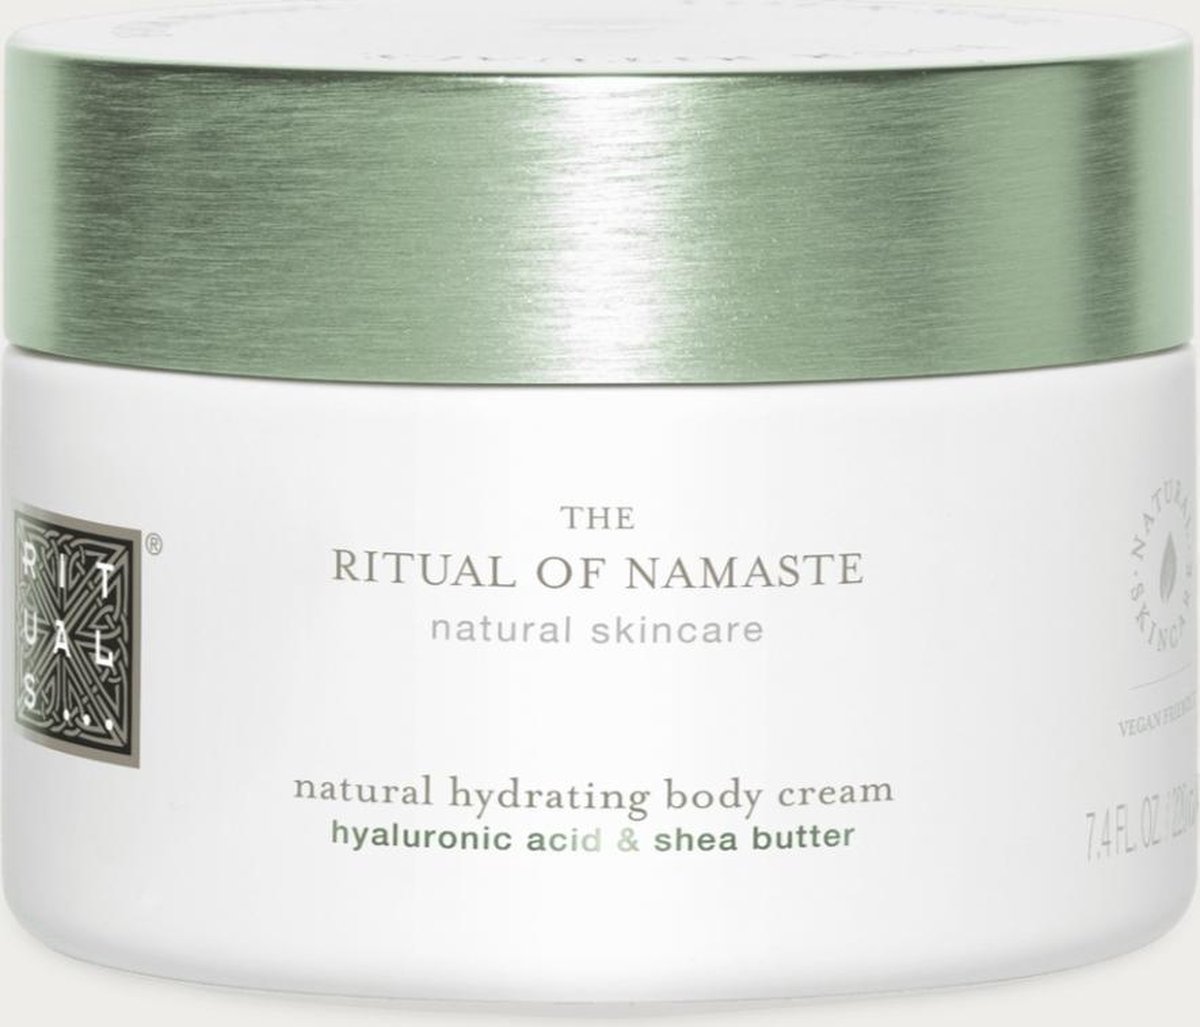 The Ritual of Namaste Body Cream - Produit Rituals - Crème pour le corps |  bol.com